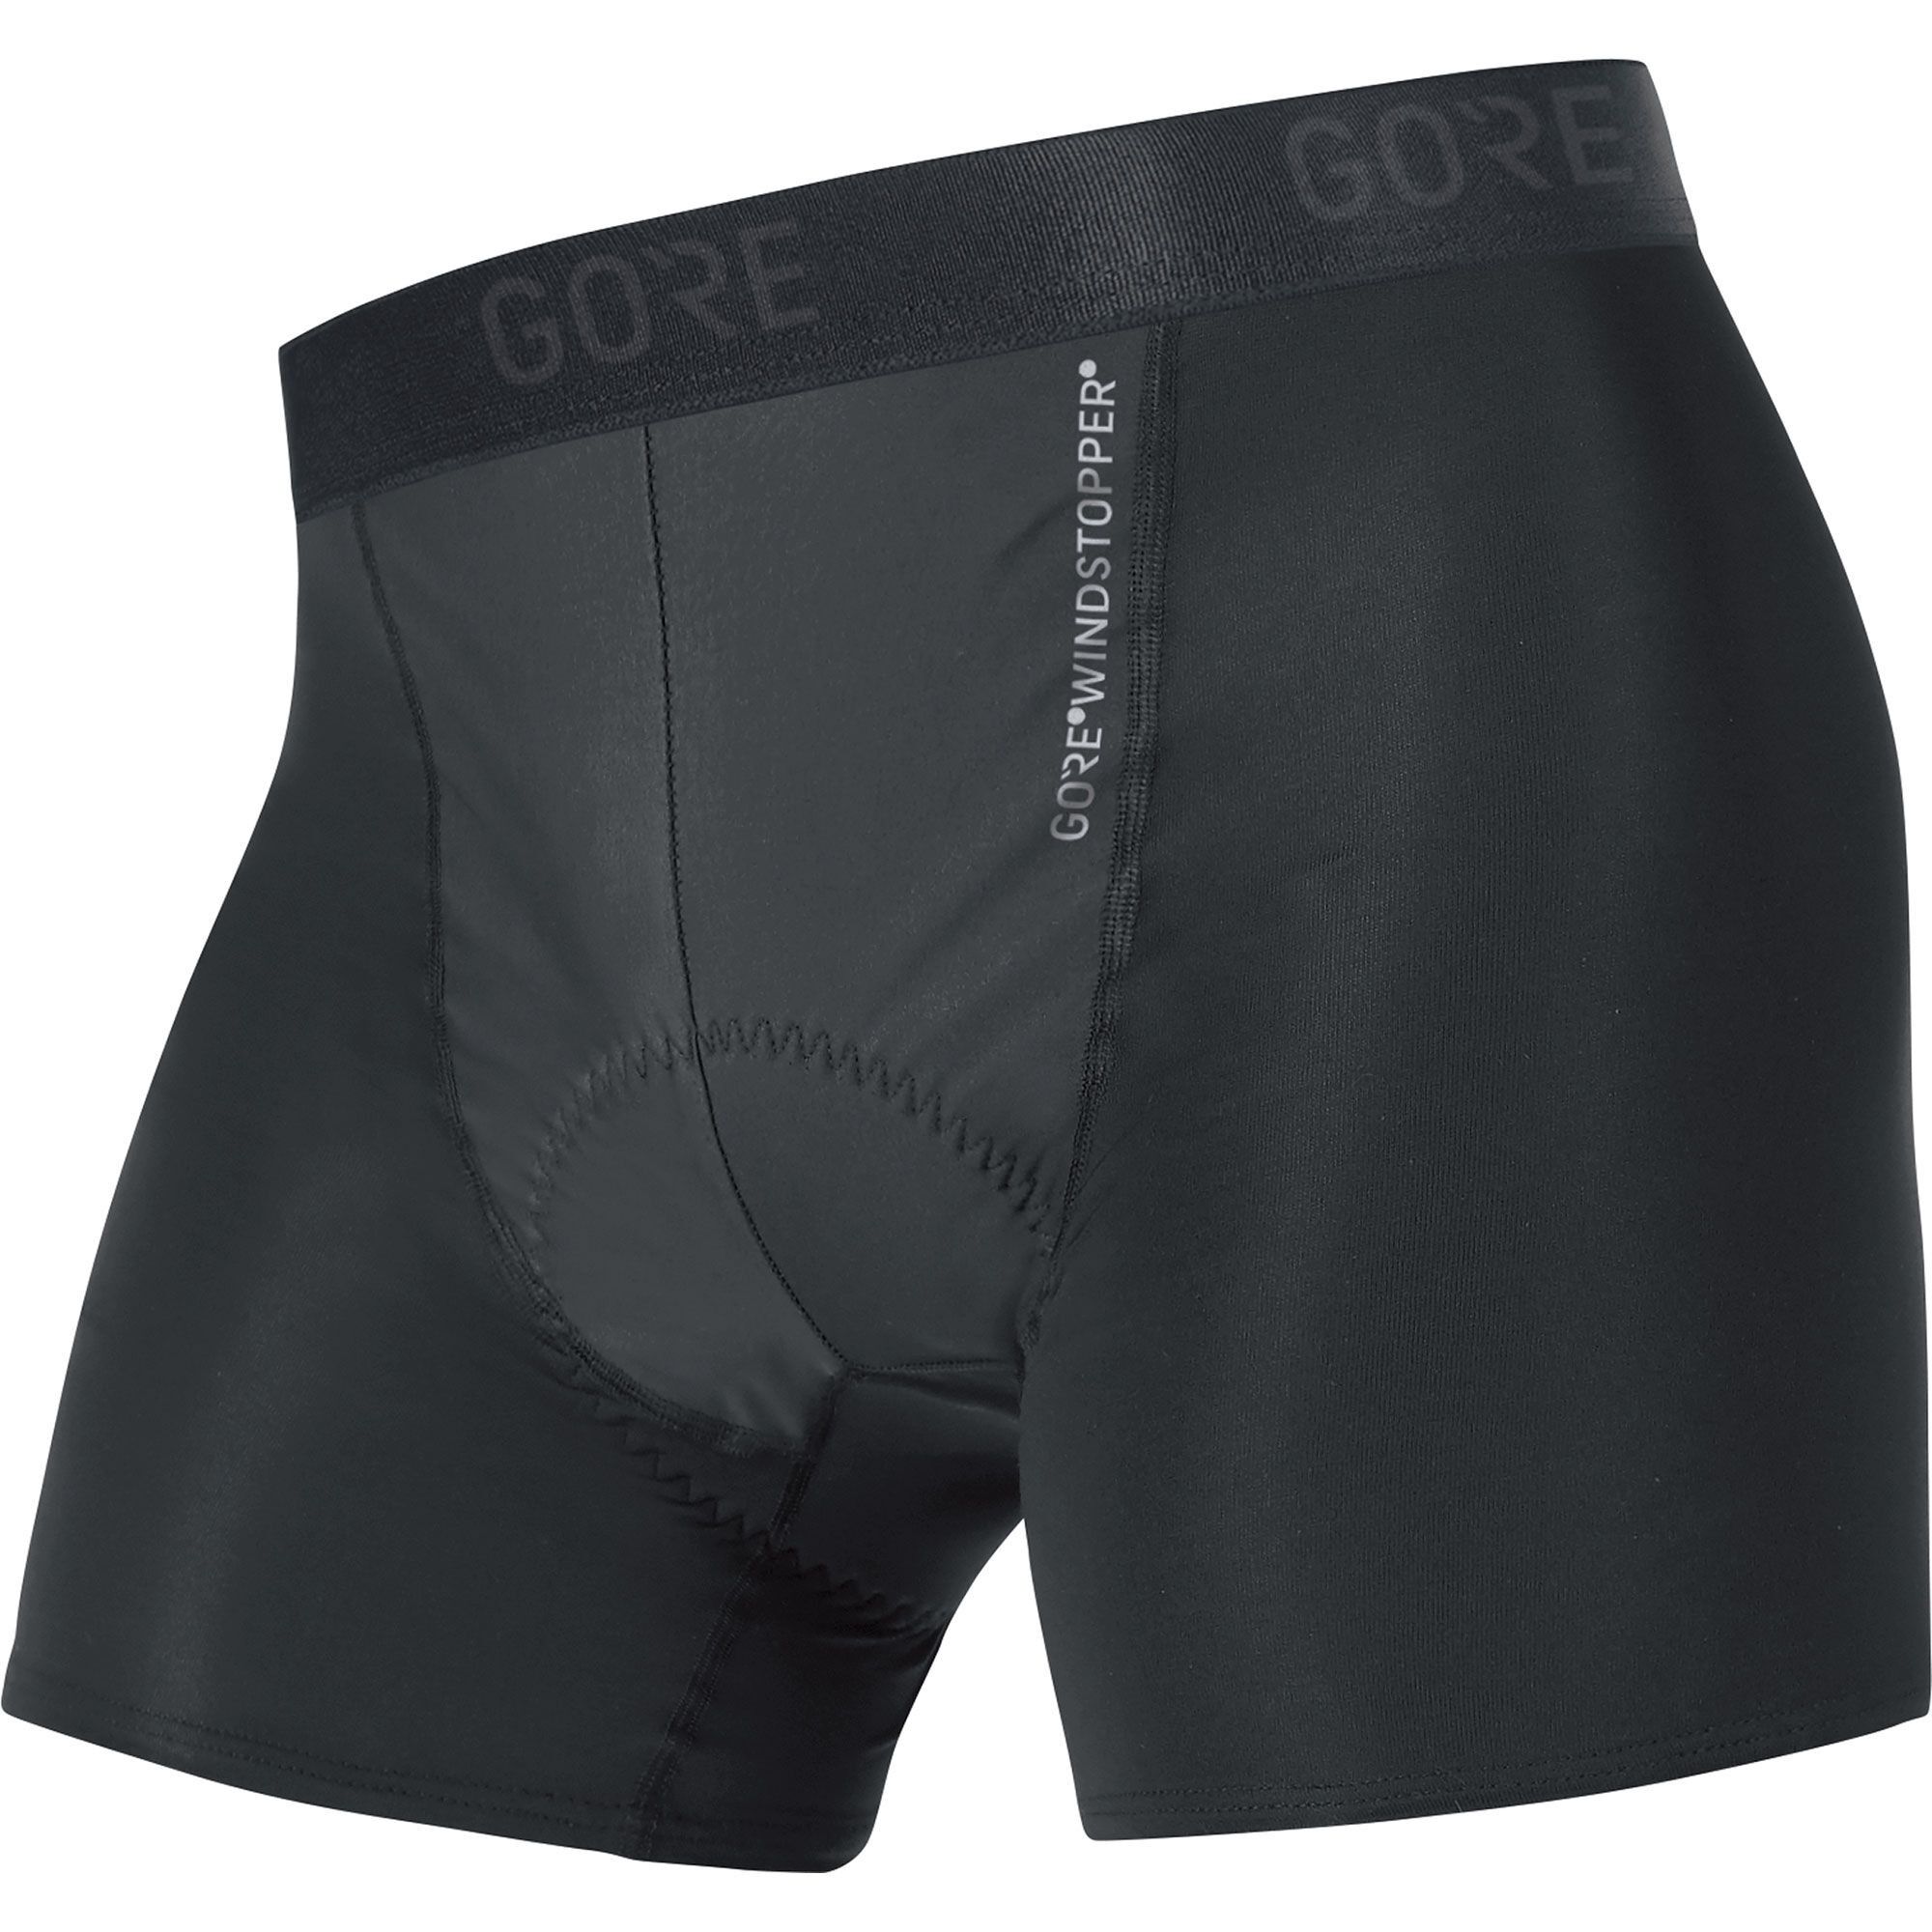 Gore Wear C3 Windstopper Base Layer Boxer Shorts+ - MTB shorts - Men's